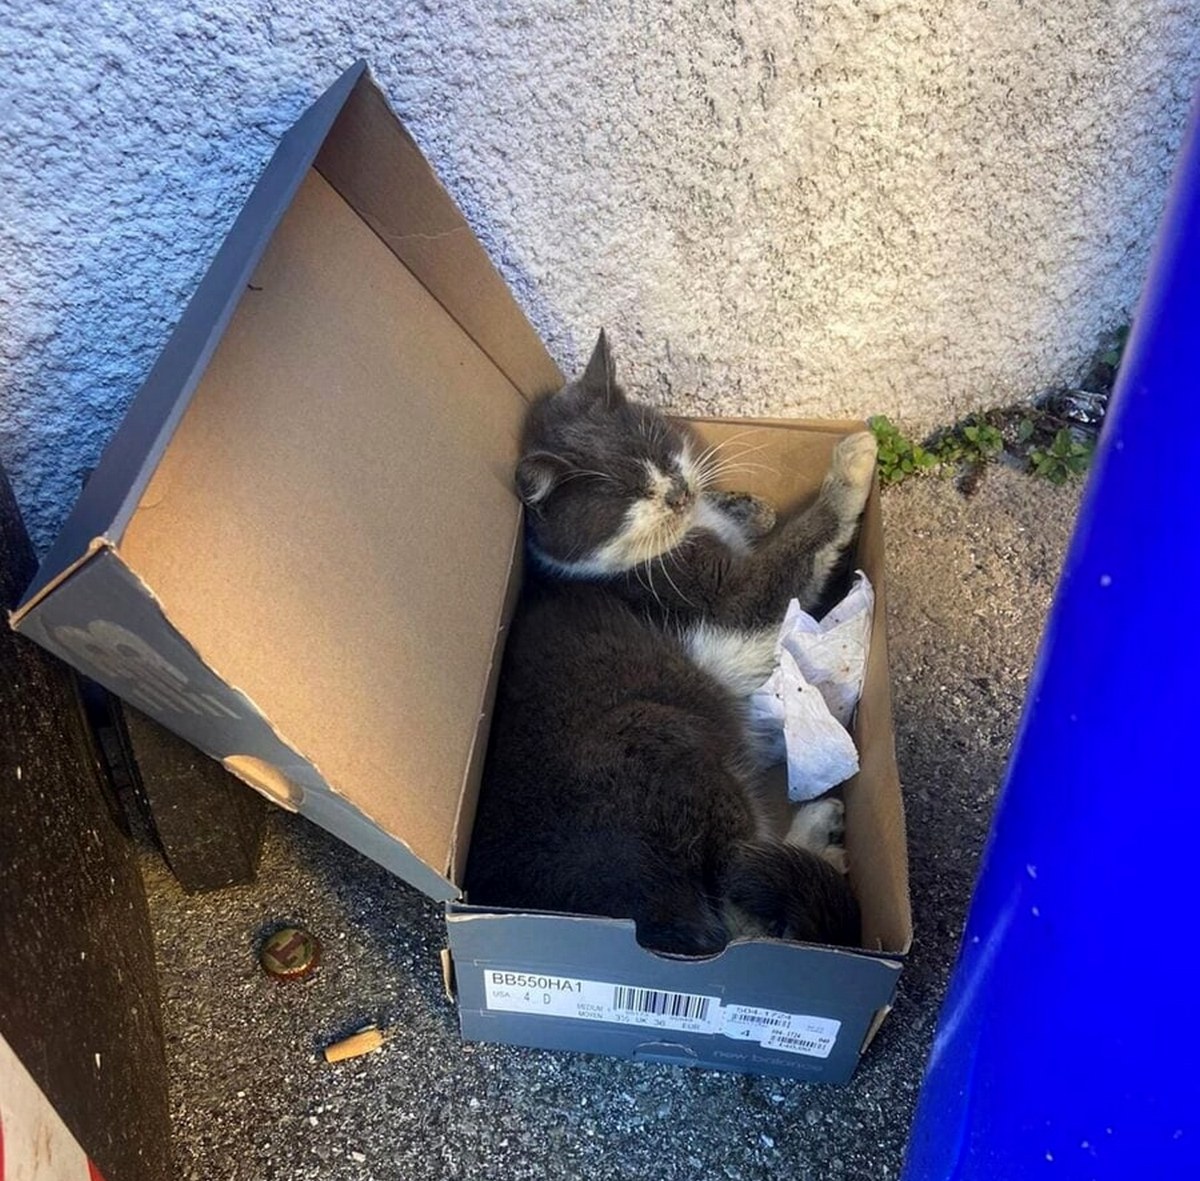 montecorvino rovella gattino abbandonato scatolo rifiuti salvato